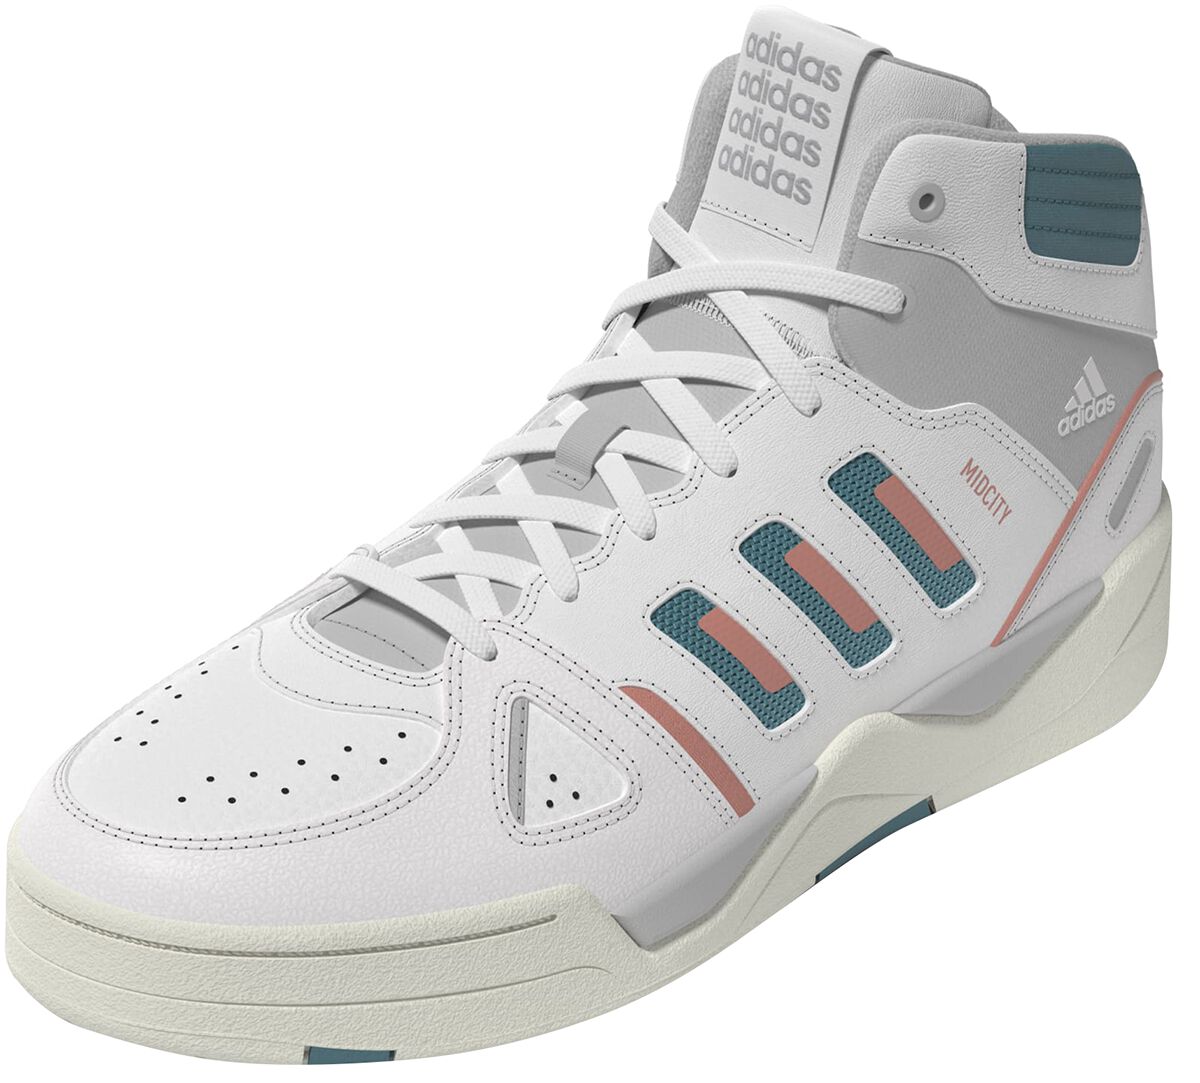 Image of Sneakers alte di Adidas - Midcity Mid - EU42 a EU46 - Uomo - bianco